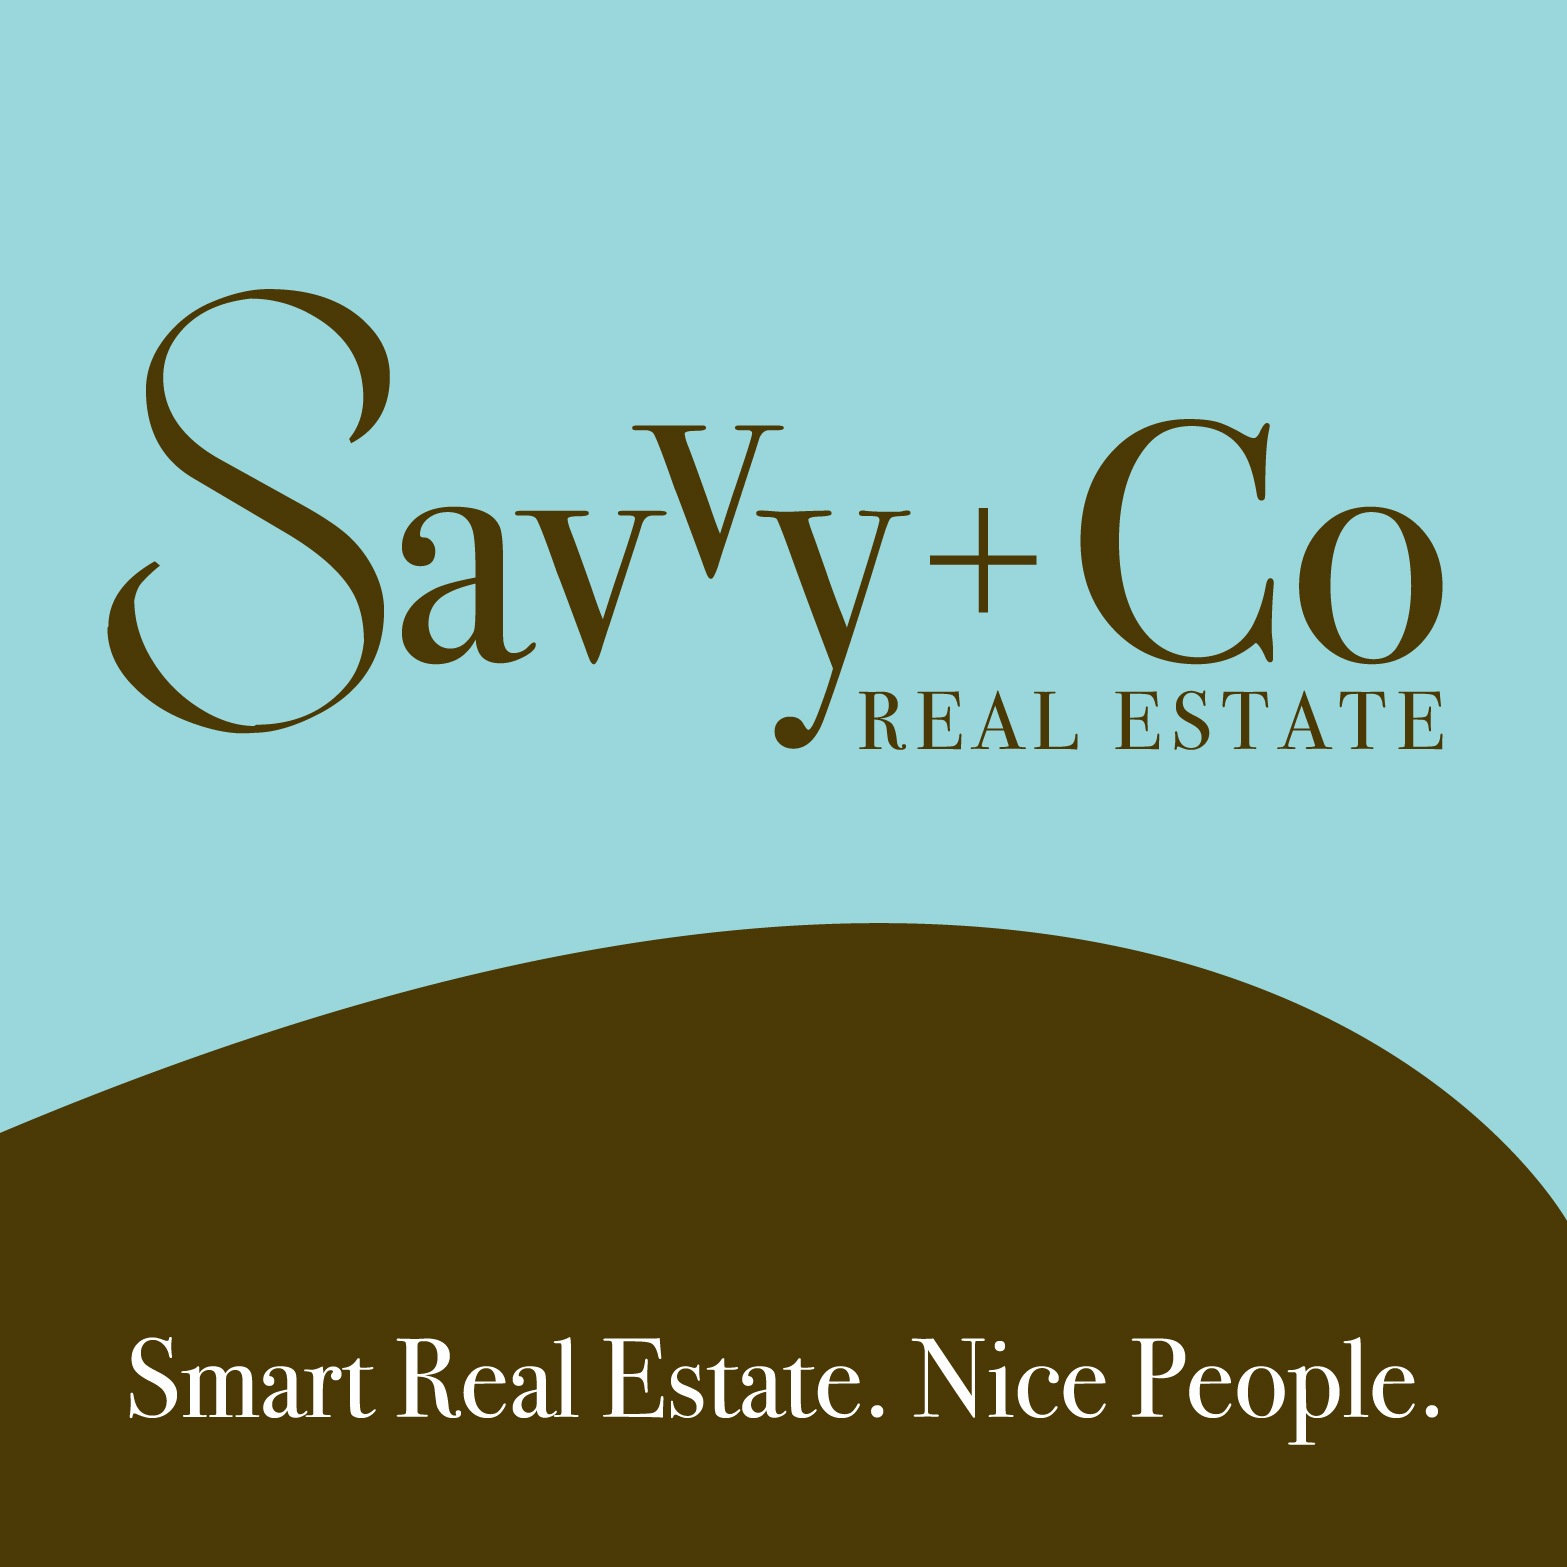 Savvy Logo - Savvy + Co. Real Estate | Charlotte, NC Real Estate Experts